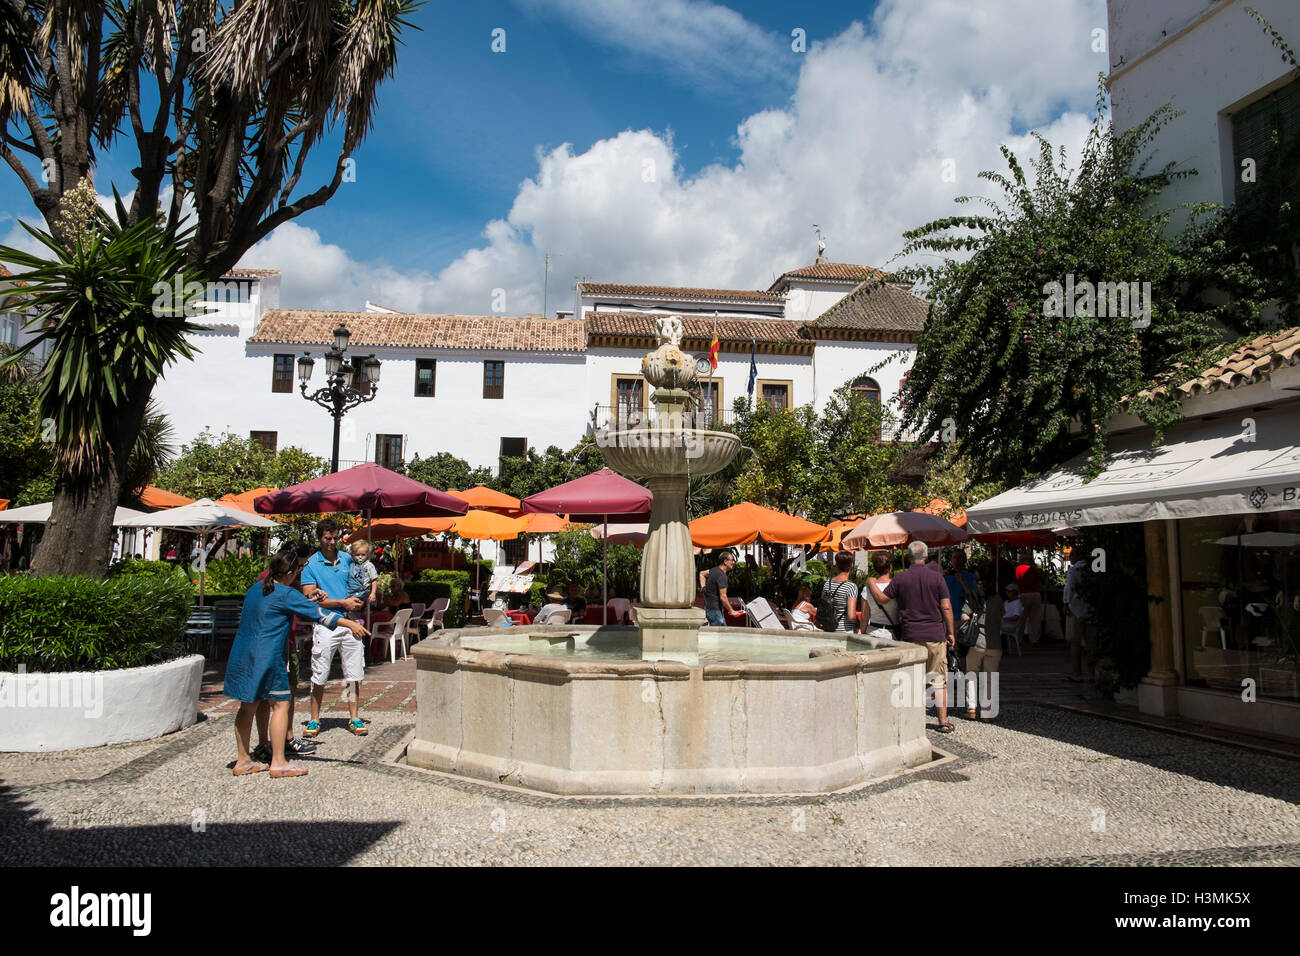 Plaza de Los Naranjos, Old Town, Marbella, Costa del Sol, Malaga Province, Andalucia, Spain Stock Photo